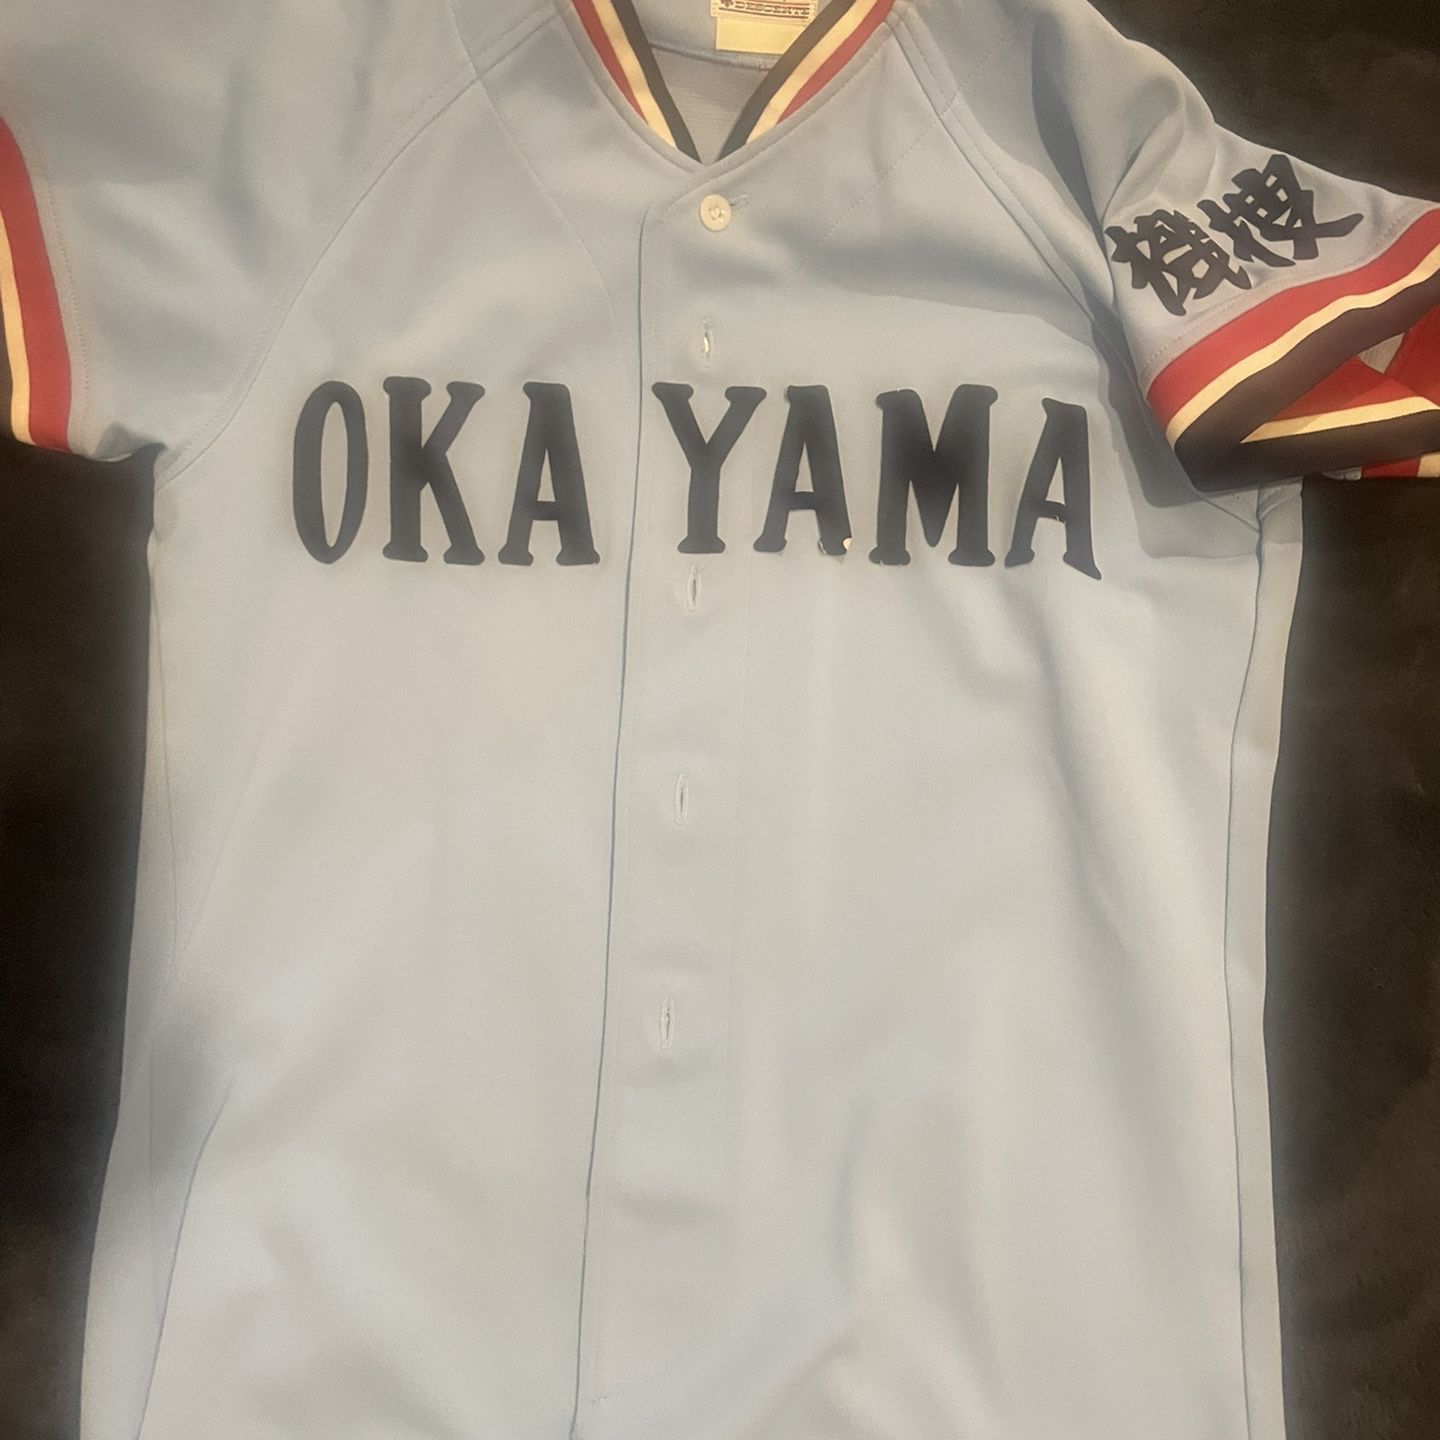 Okayama Japanese Baseball Jersey for Sale in Las Vegas, NV - OfferUp